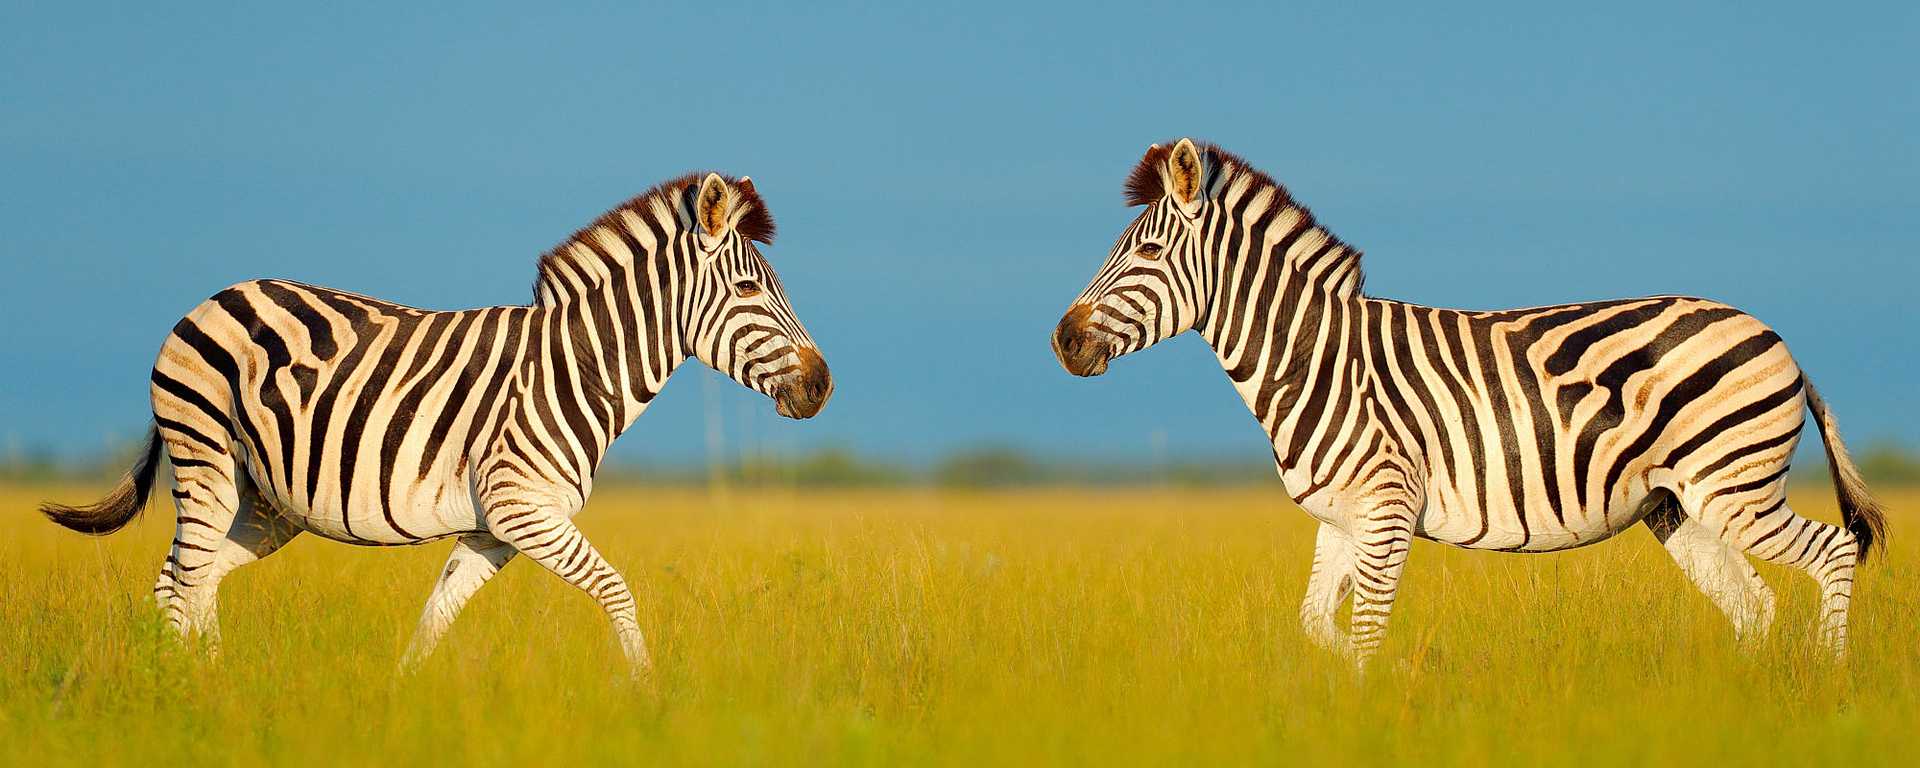 Two zebras in the grasslands of Nxai National Park, Botswana